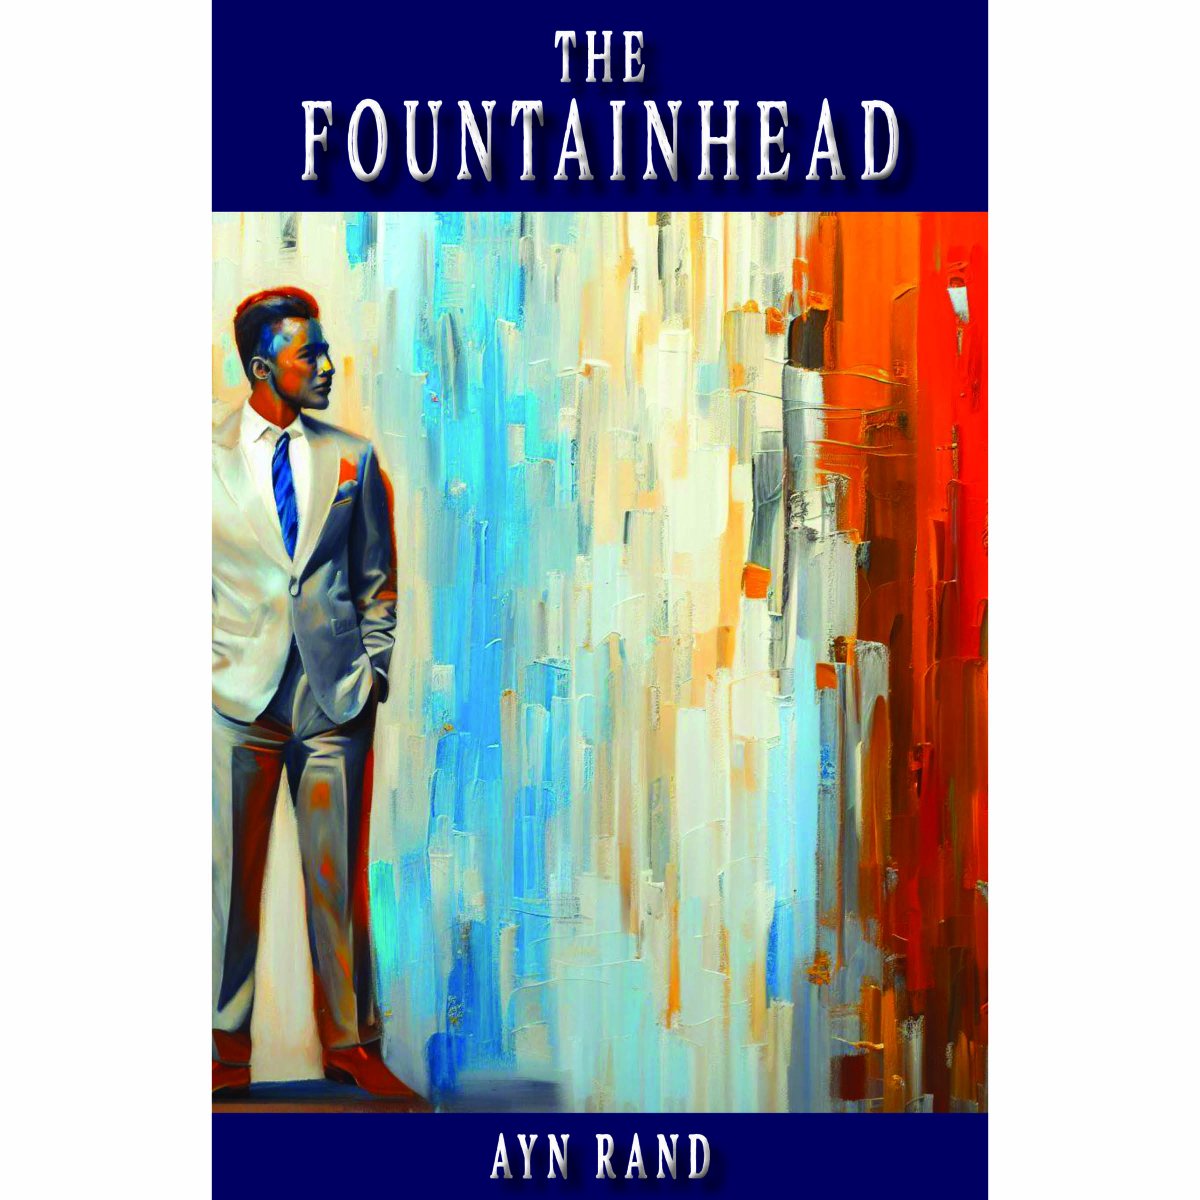 The Fountainhead, by Ayn Rand
Book design by Andrea Reider

#books #authors #writing #Selfpublishing #literature #epub #author #writers #writingcommunity #publishing #literaryfiction #poetry #drama #fiction #nonfiction #aynrand #atlasshrugged #thefountainhead #fountainhead #book